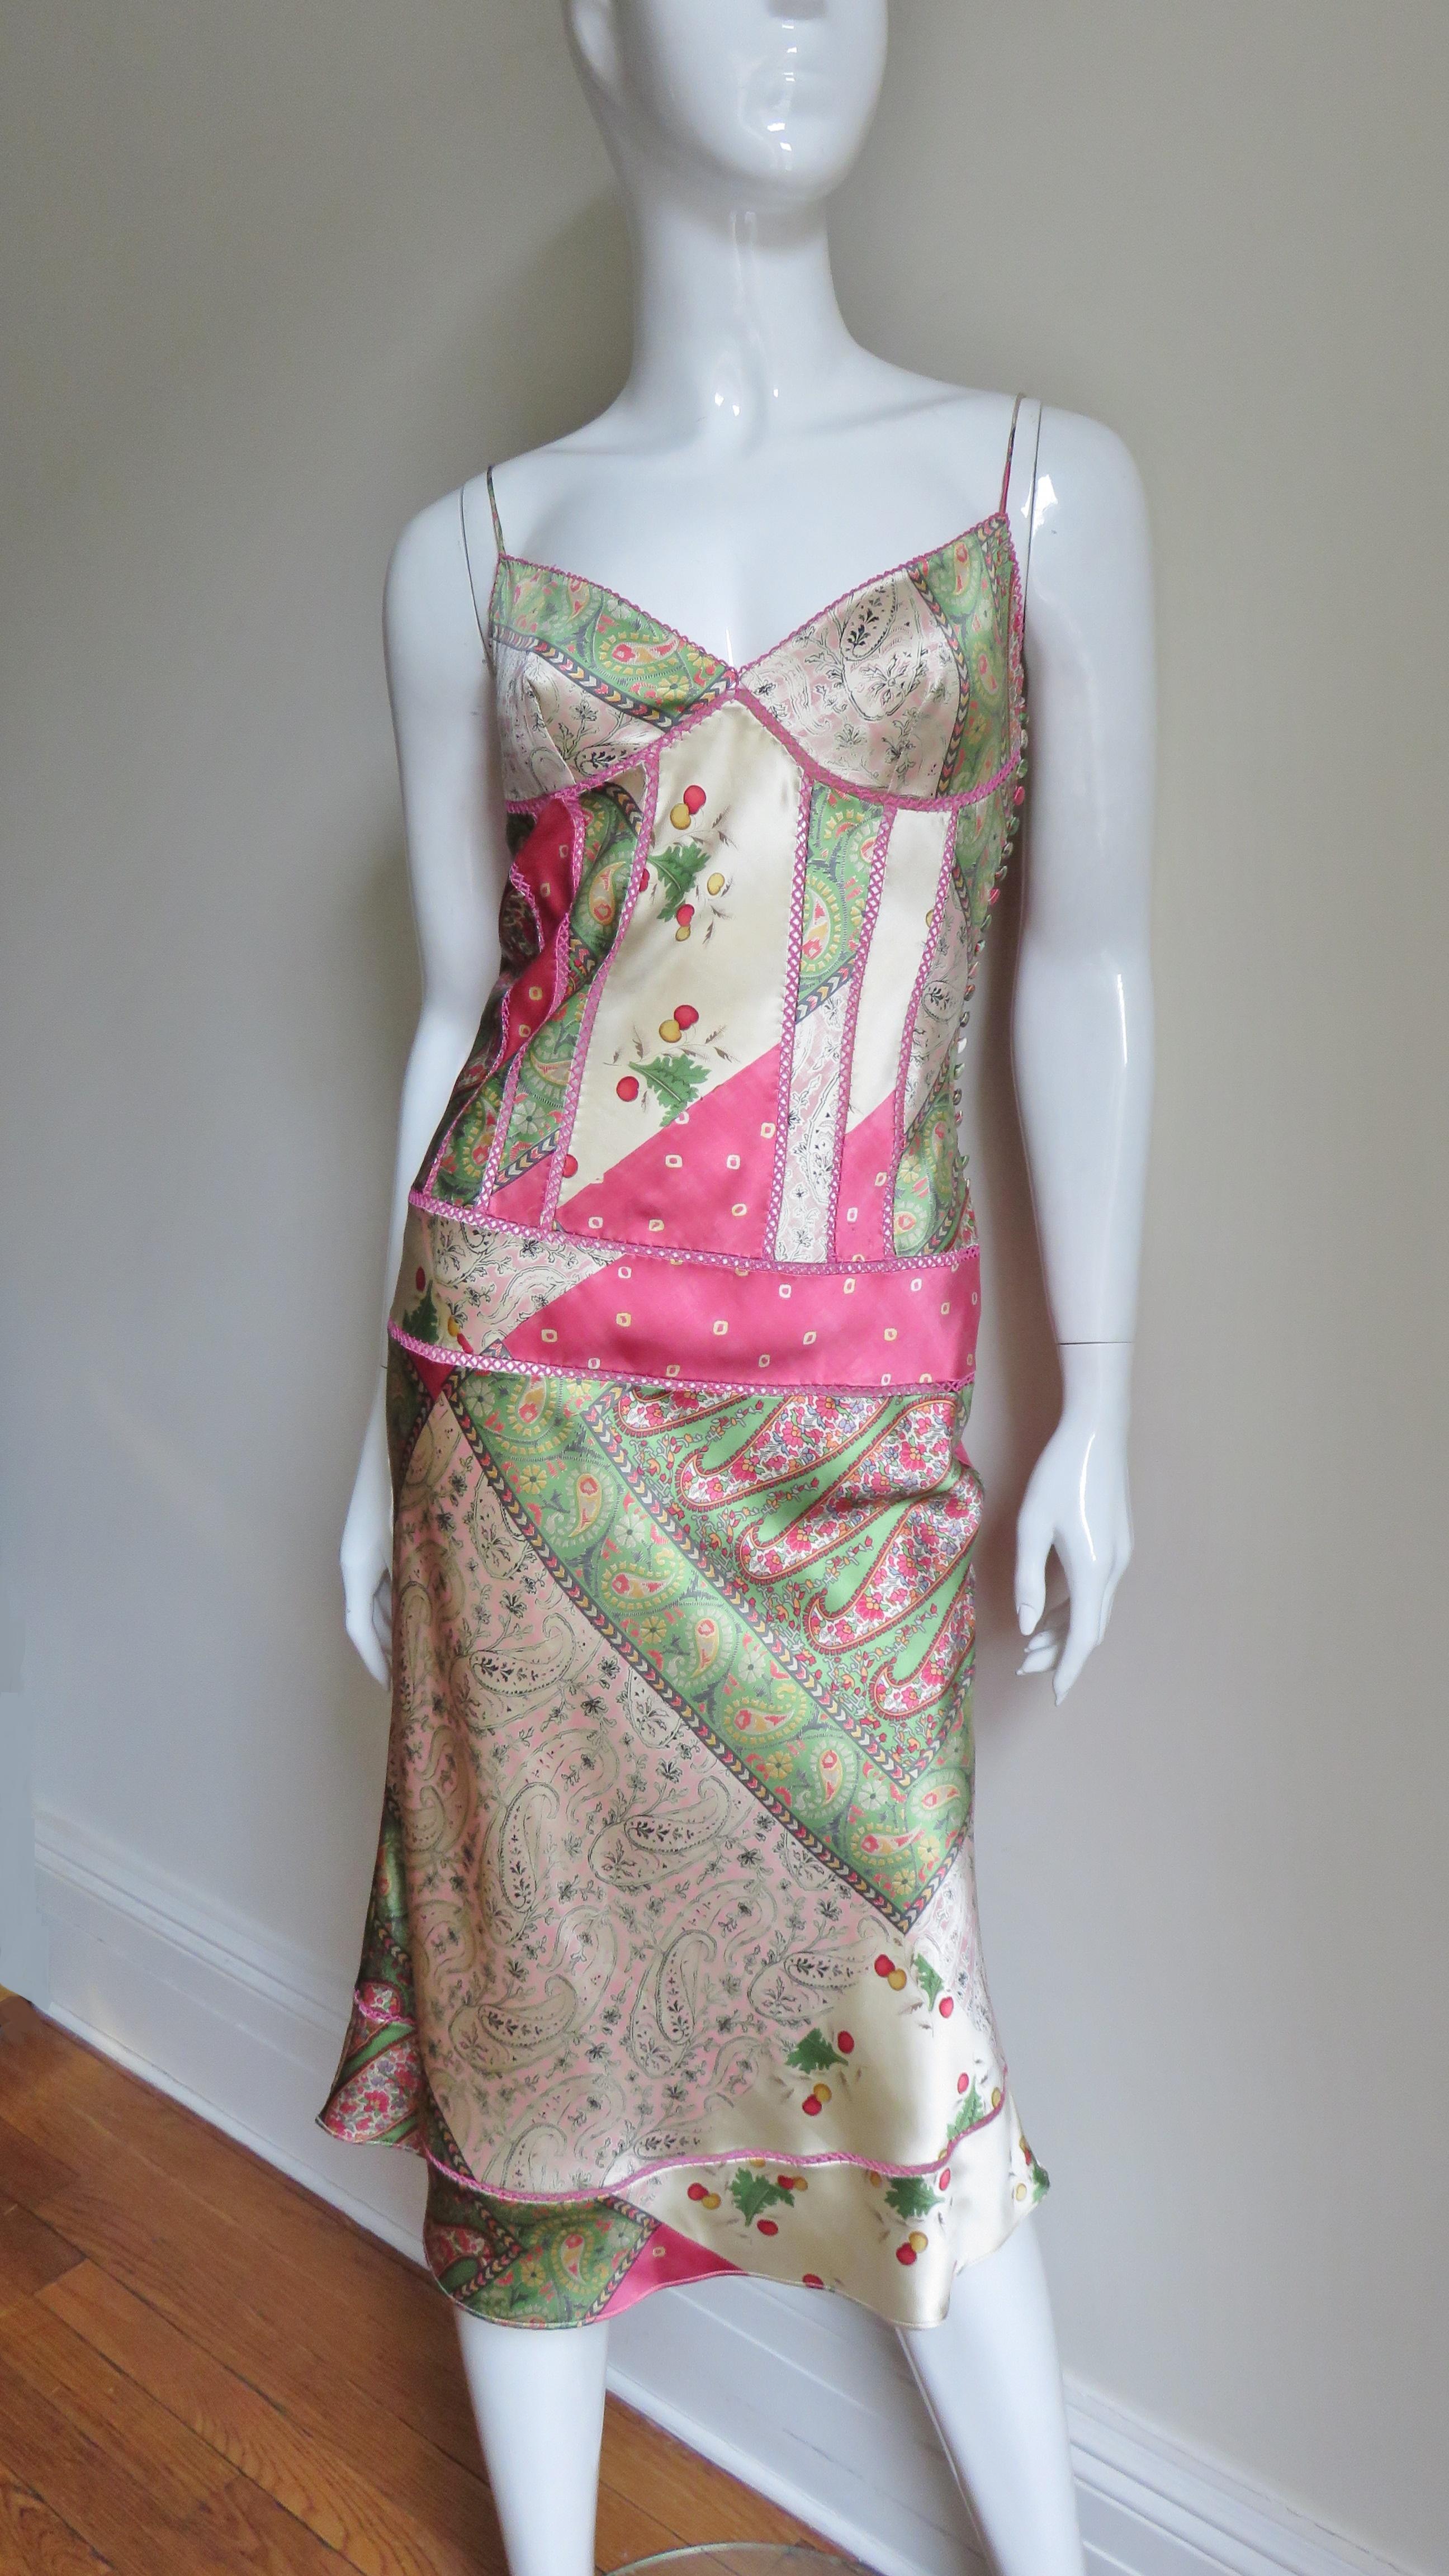 John Galliano for Christian Dior S/S 2004 Mixed Print Silk Slip Dress For Sale 1